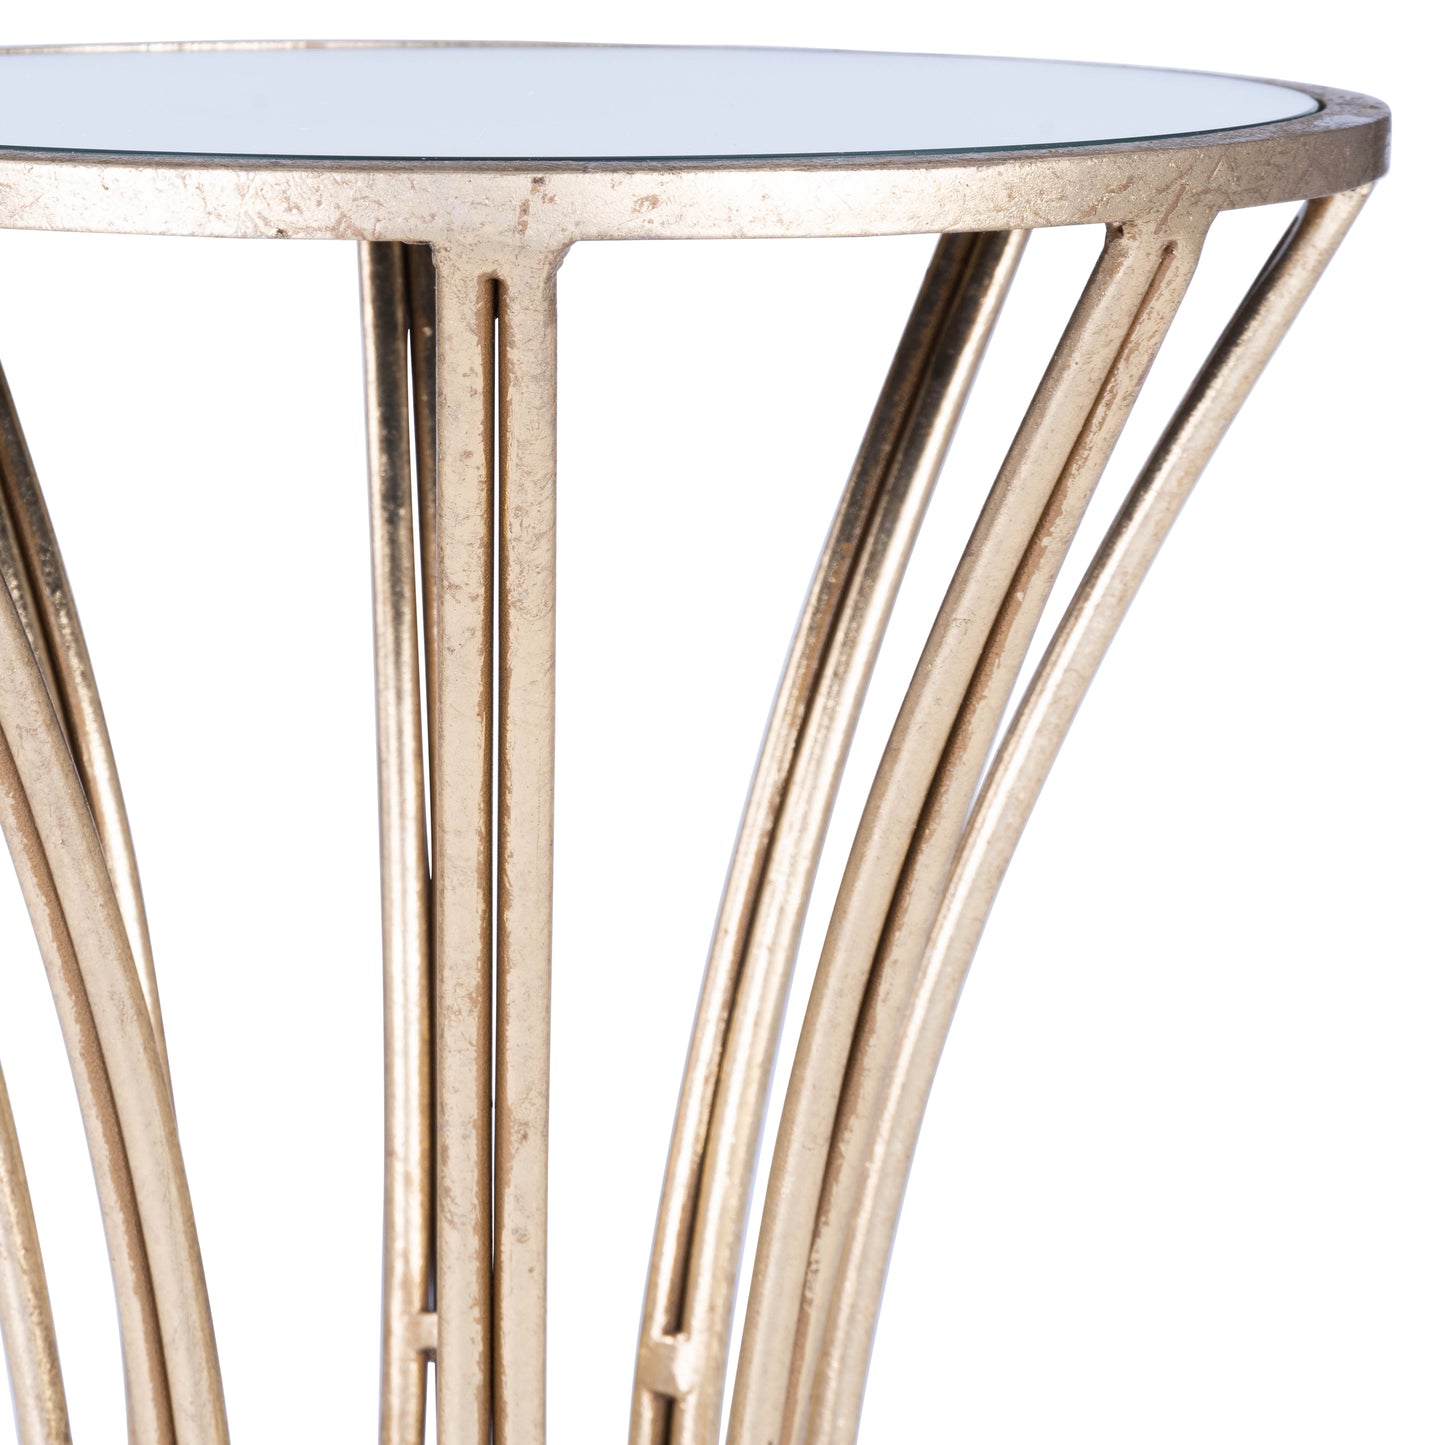 Faruh Metal & Mirrored Side Table in Silver  5492384